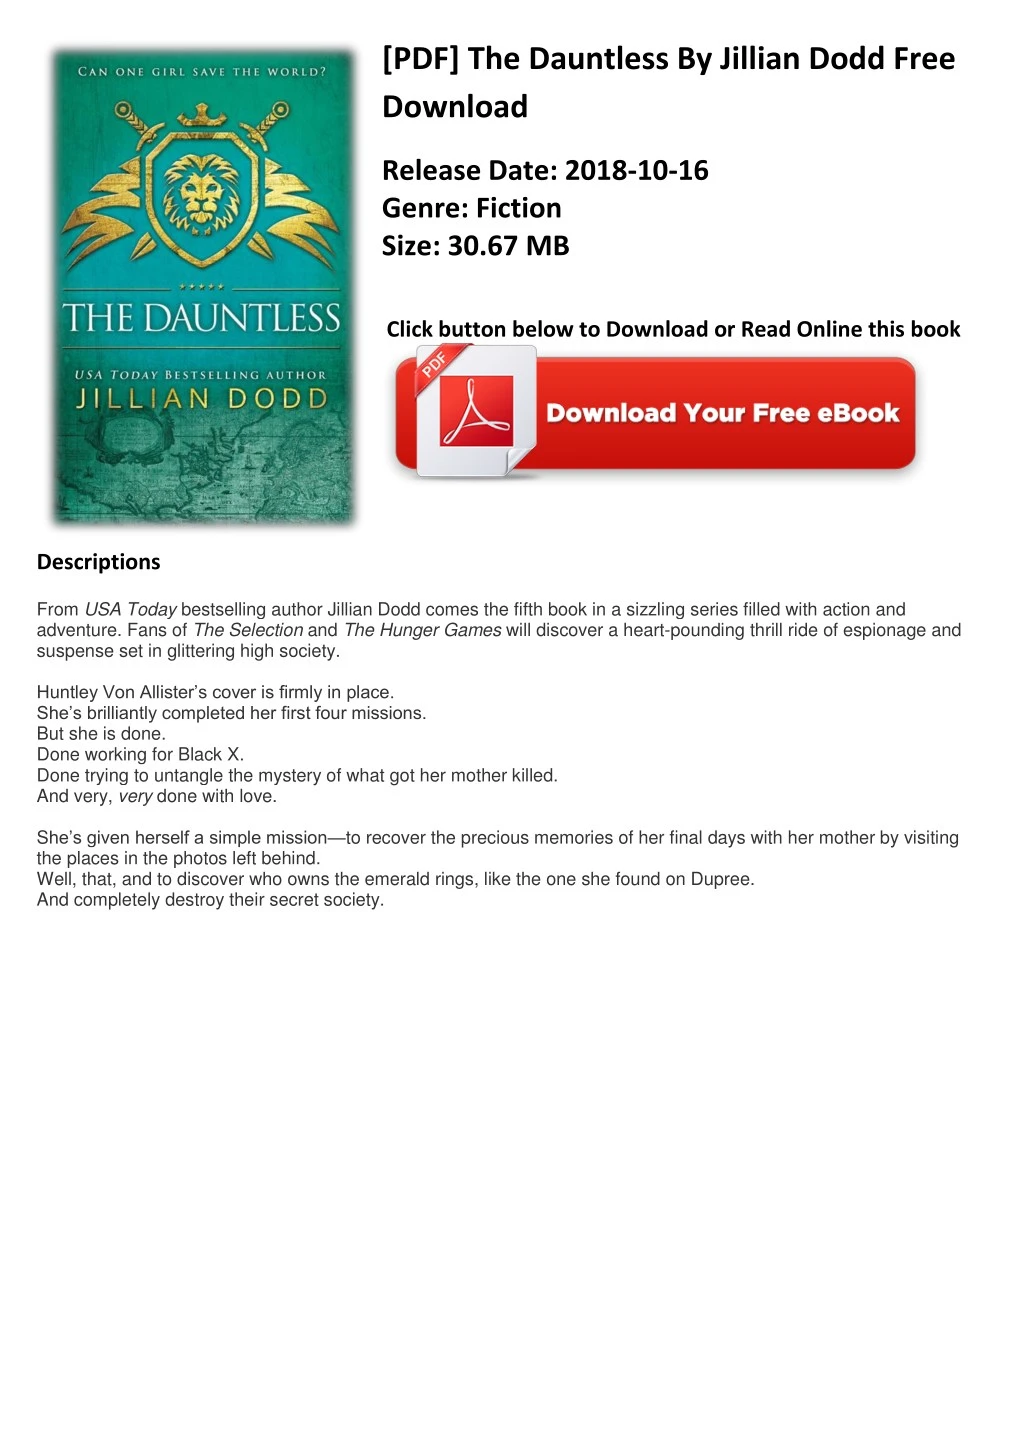 pdf the dauntless by jillian dodd free download